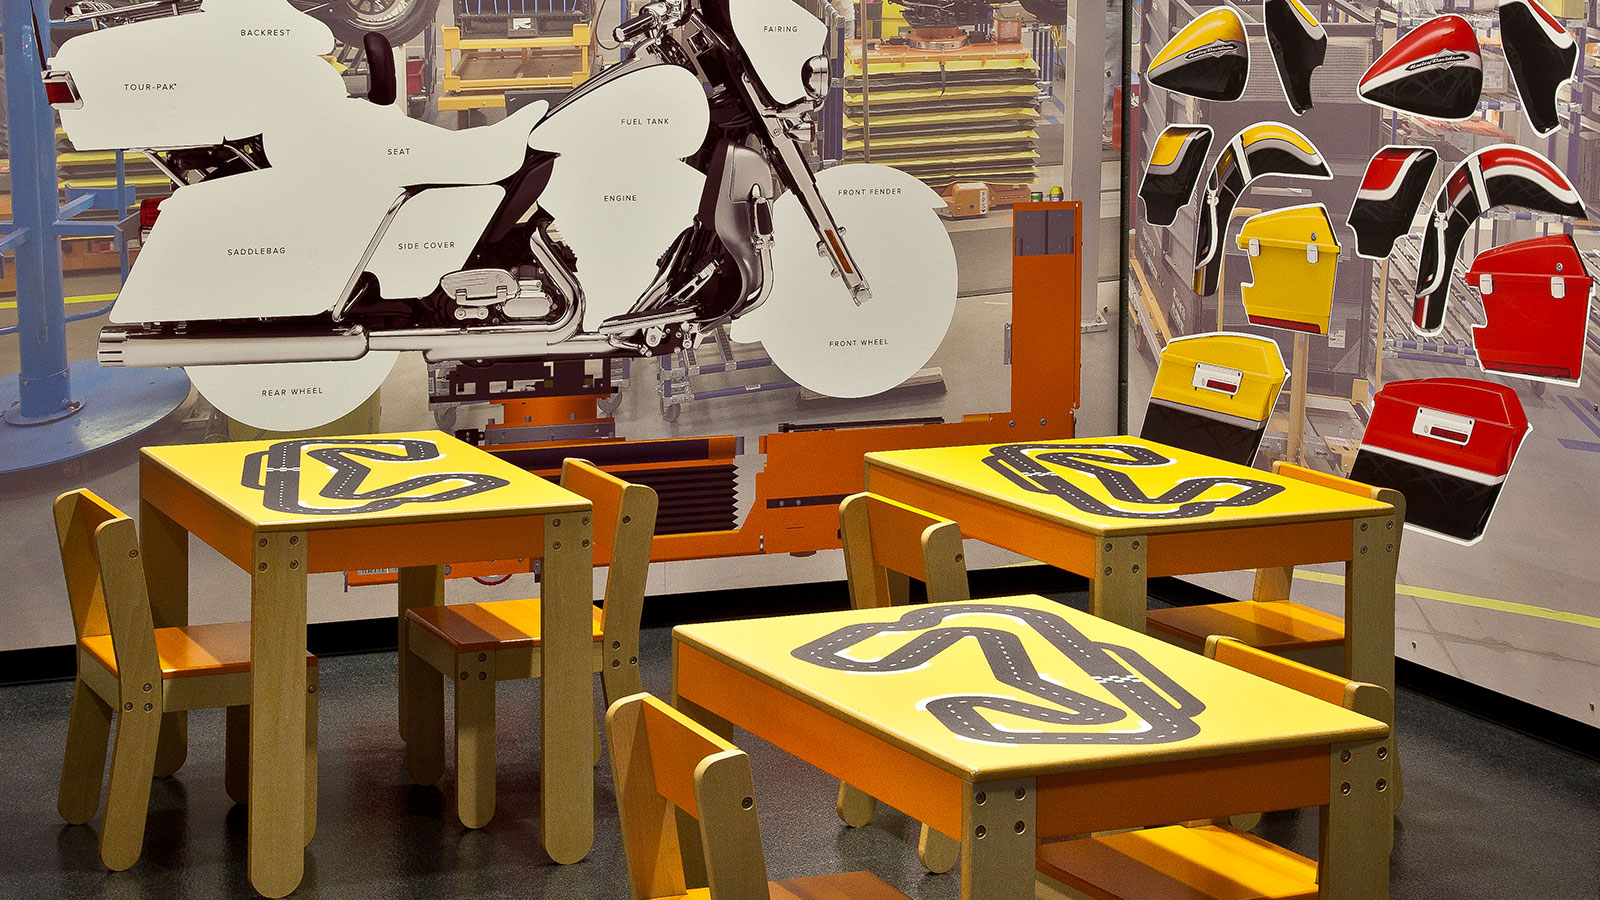 Harley-Davidson’s York Tour Center museum, PHILADELPHIA